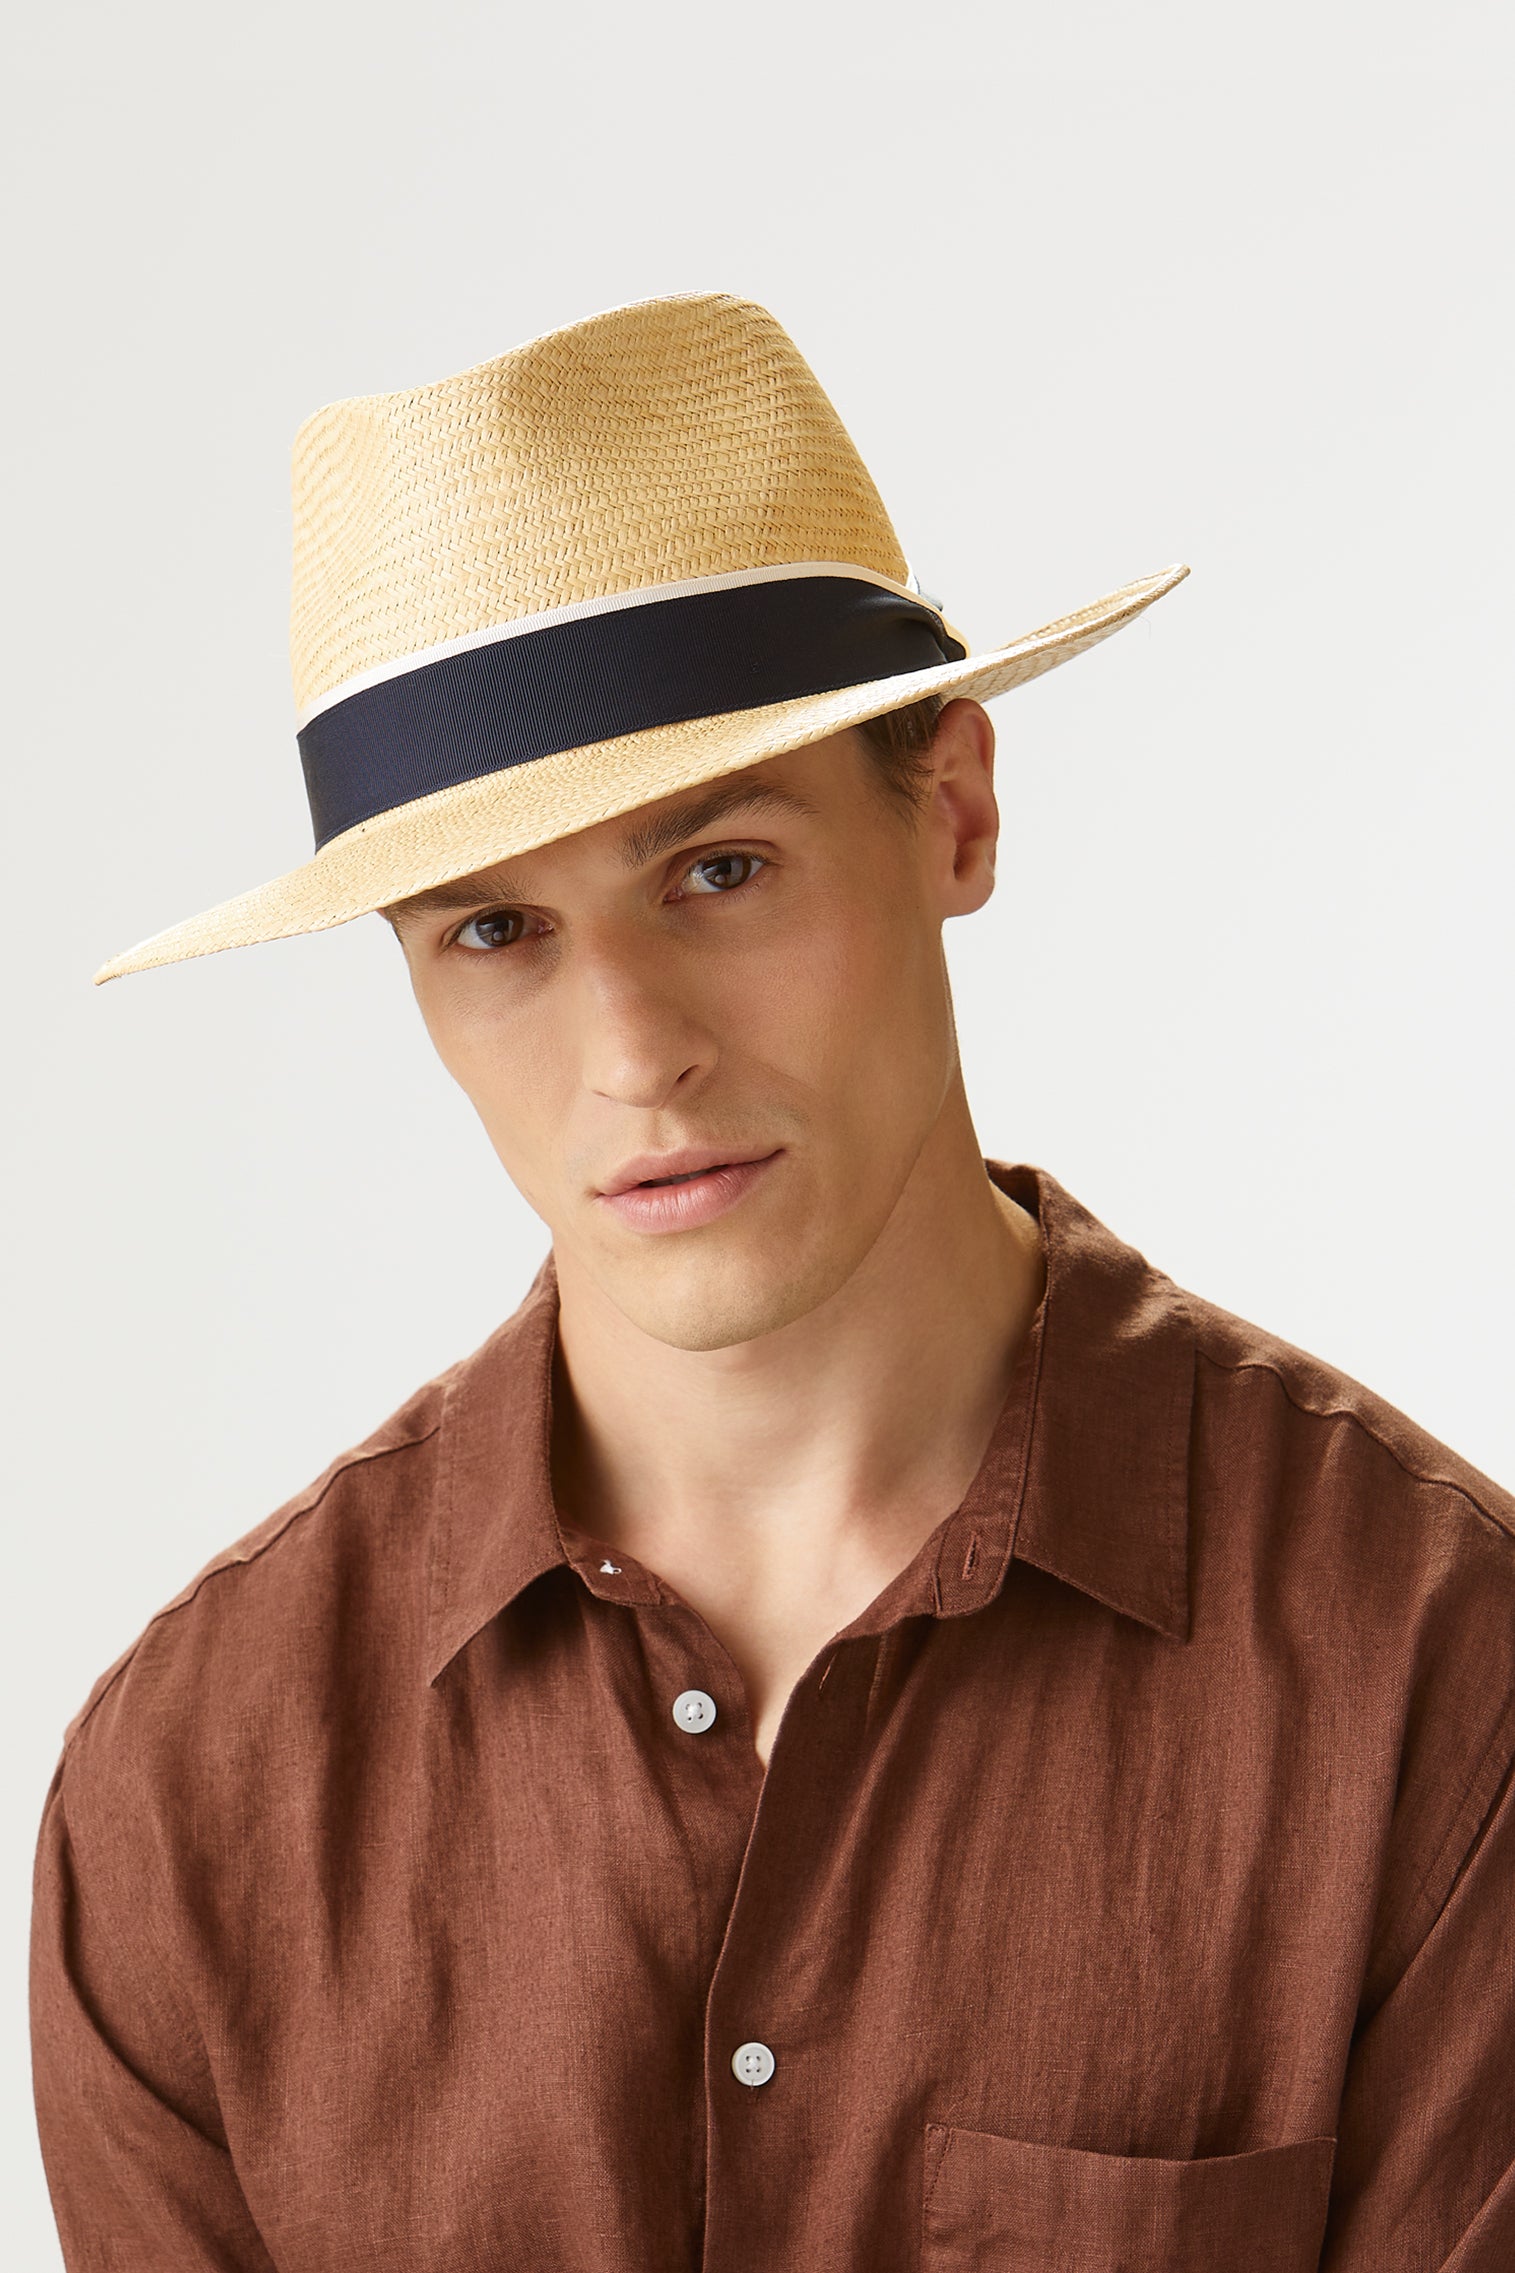 QEST Panama - Panamas, Straw and Sun Hats for Women - Lock & Co. Hatters London UK